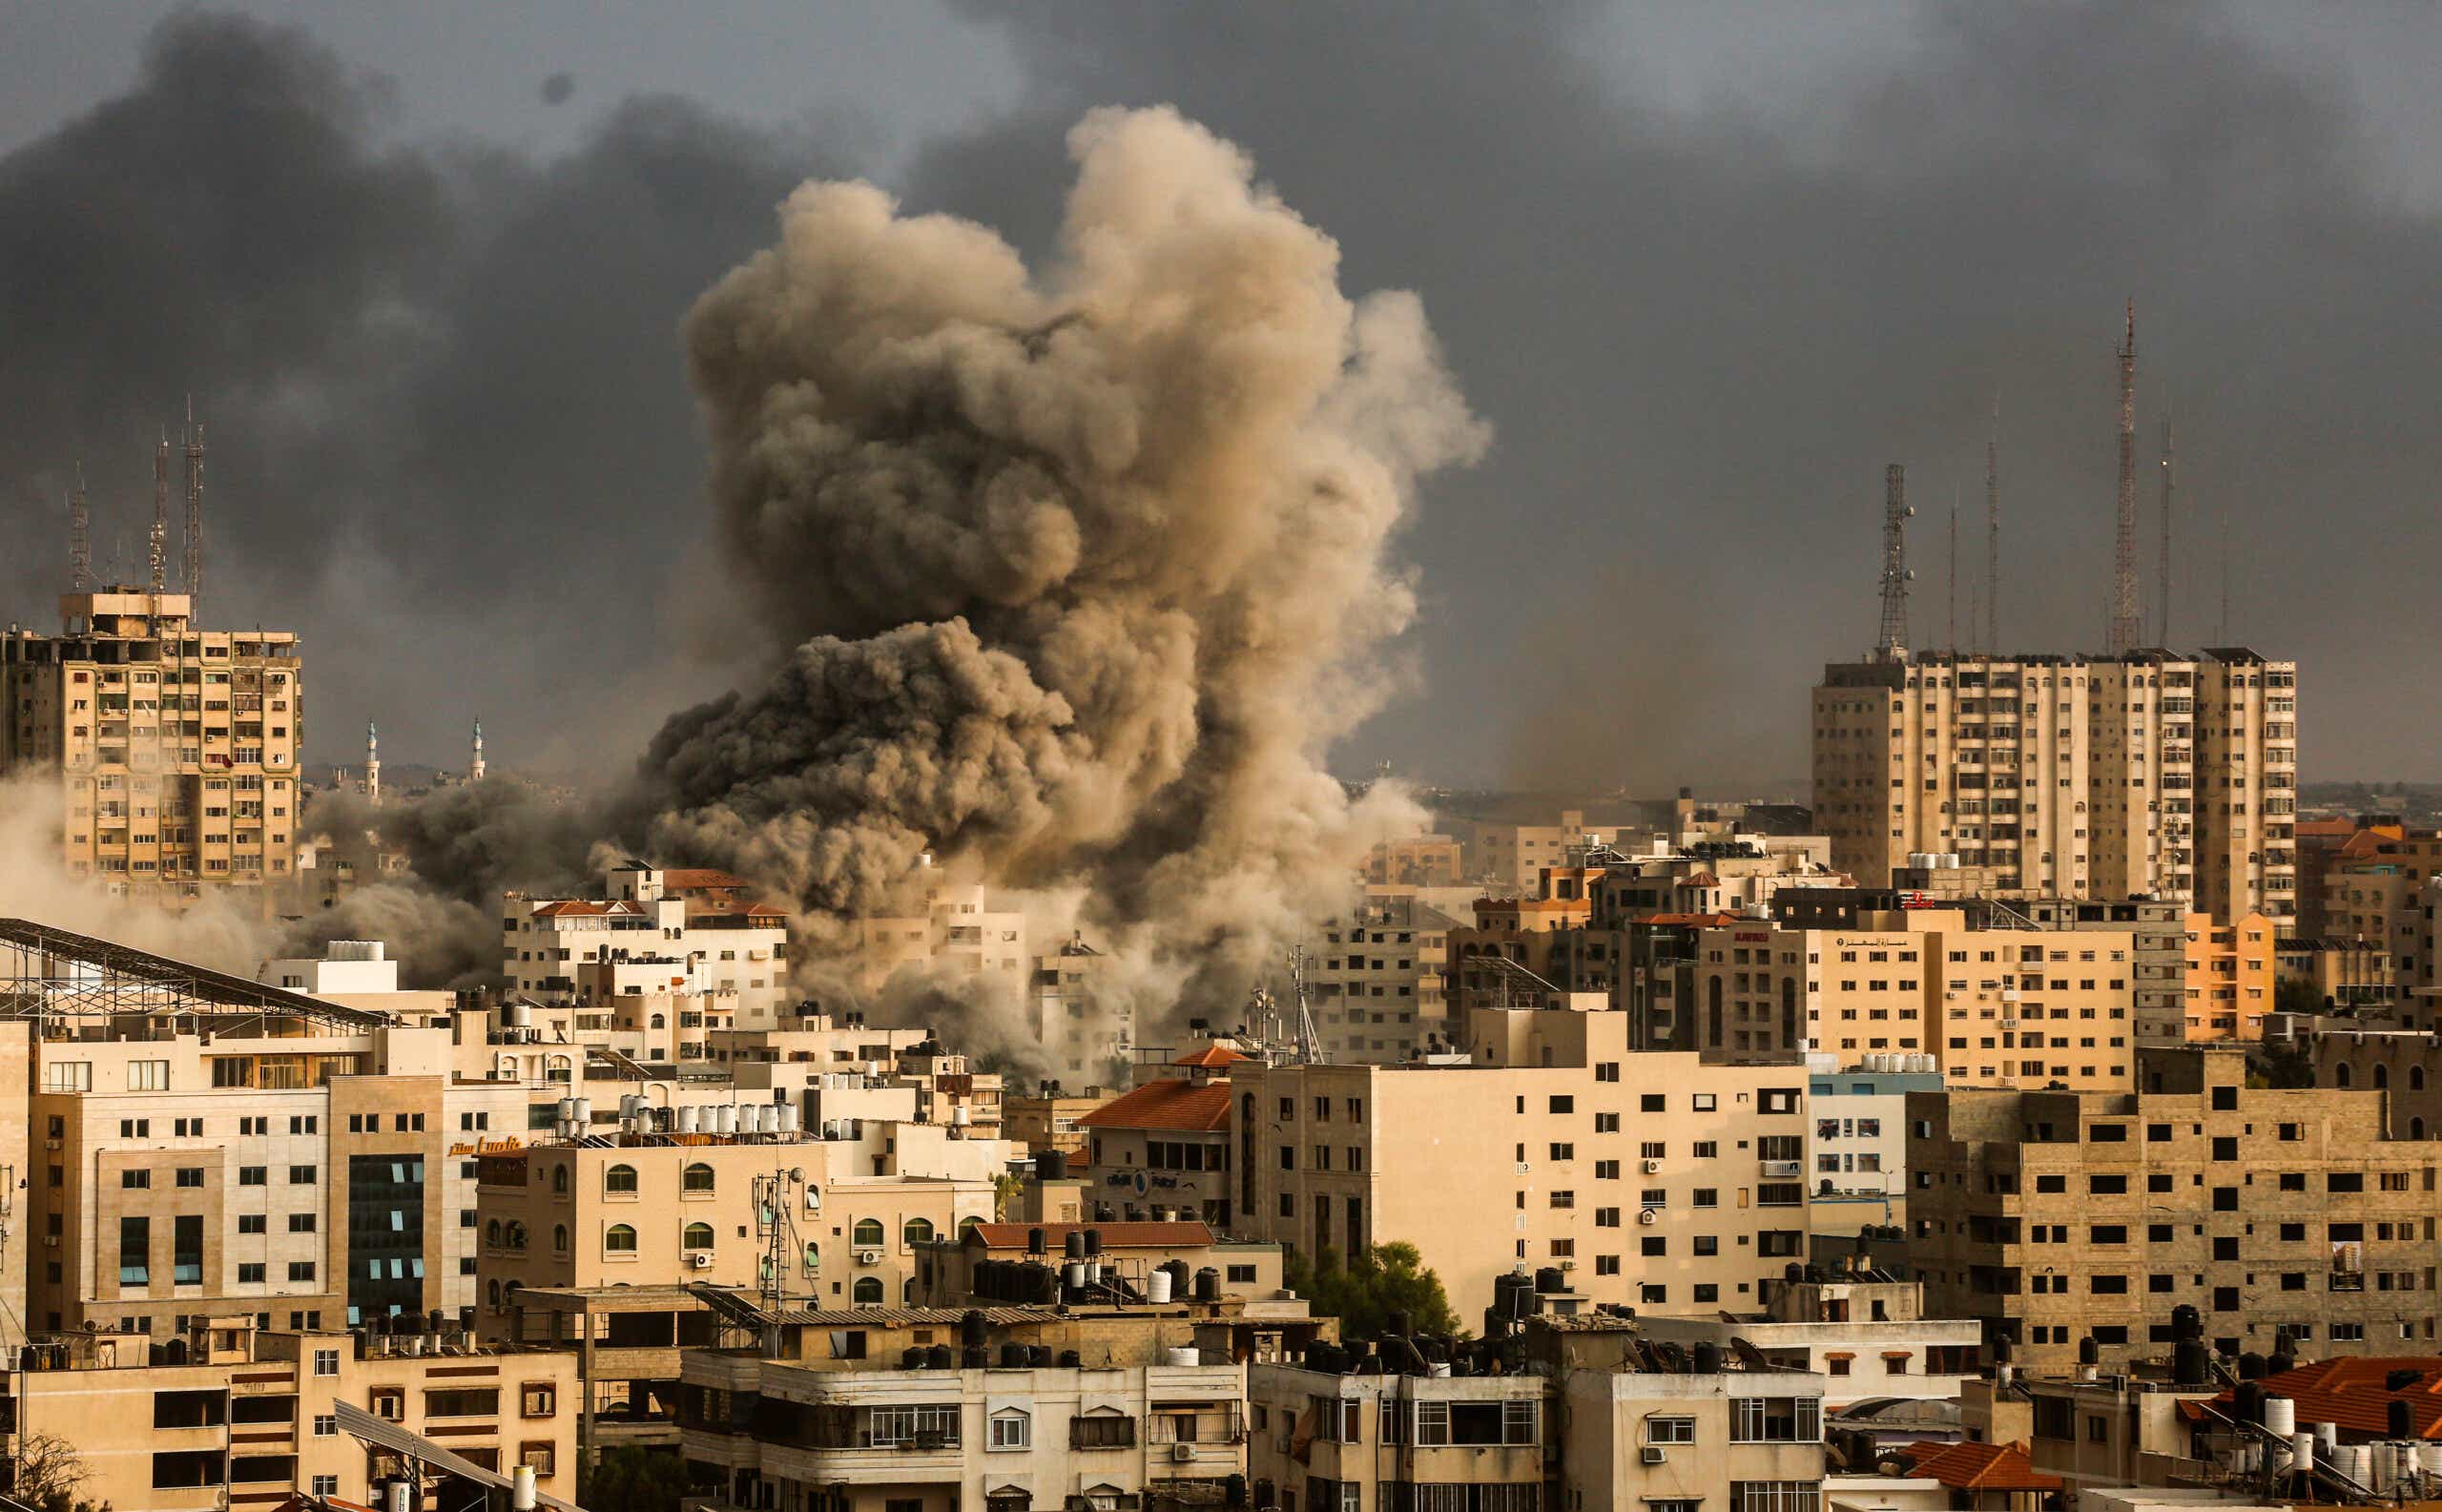 Massive billows of smoke rise over buildings in Gaza City